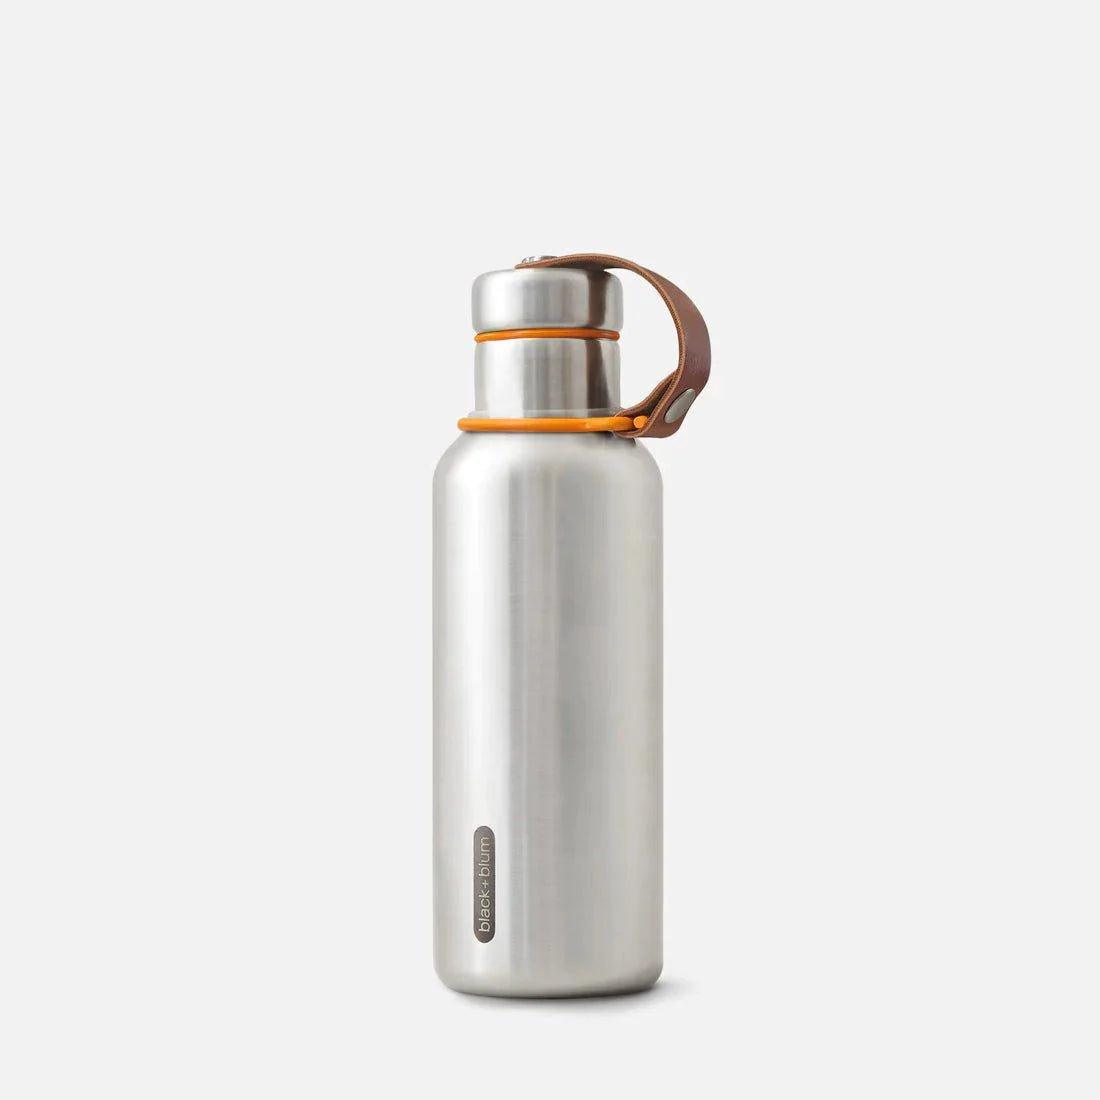 Stainless Steel Insulated Water Bottle - 500ml - Orange